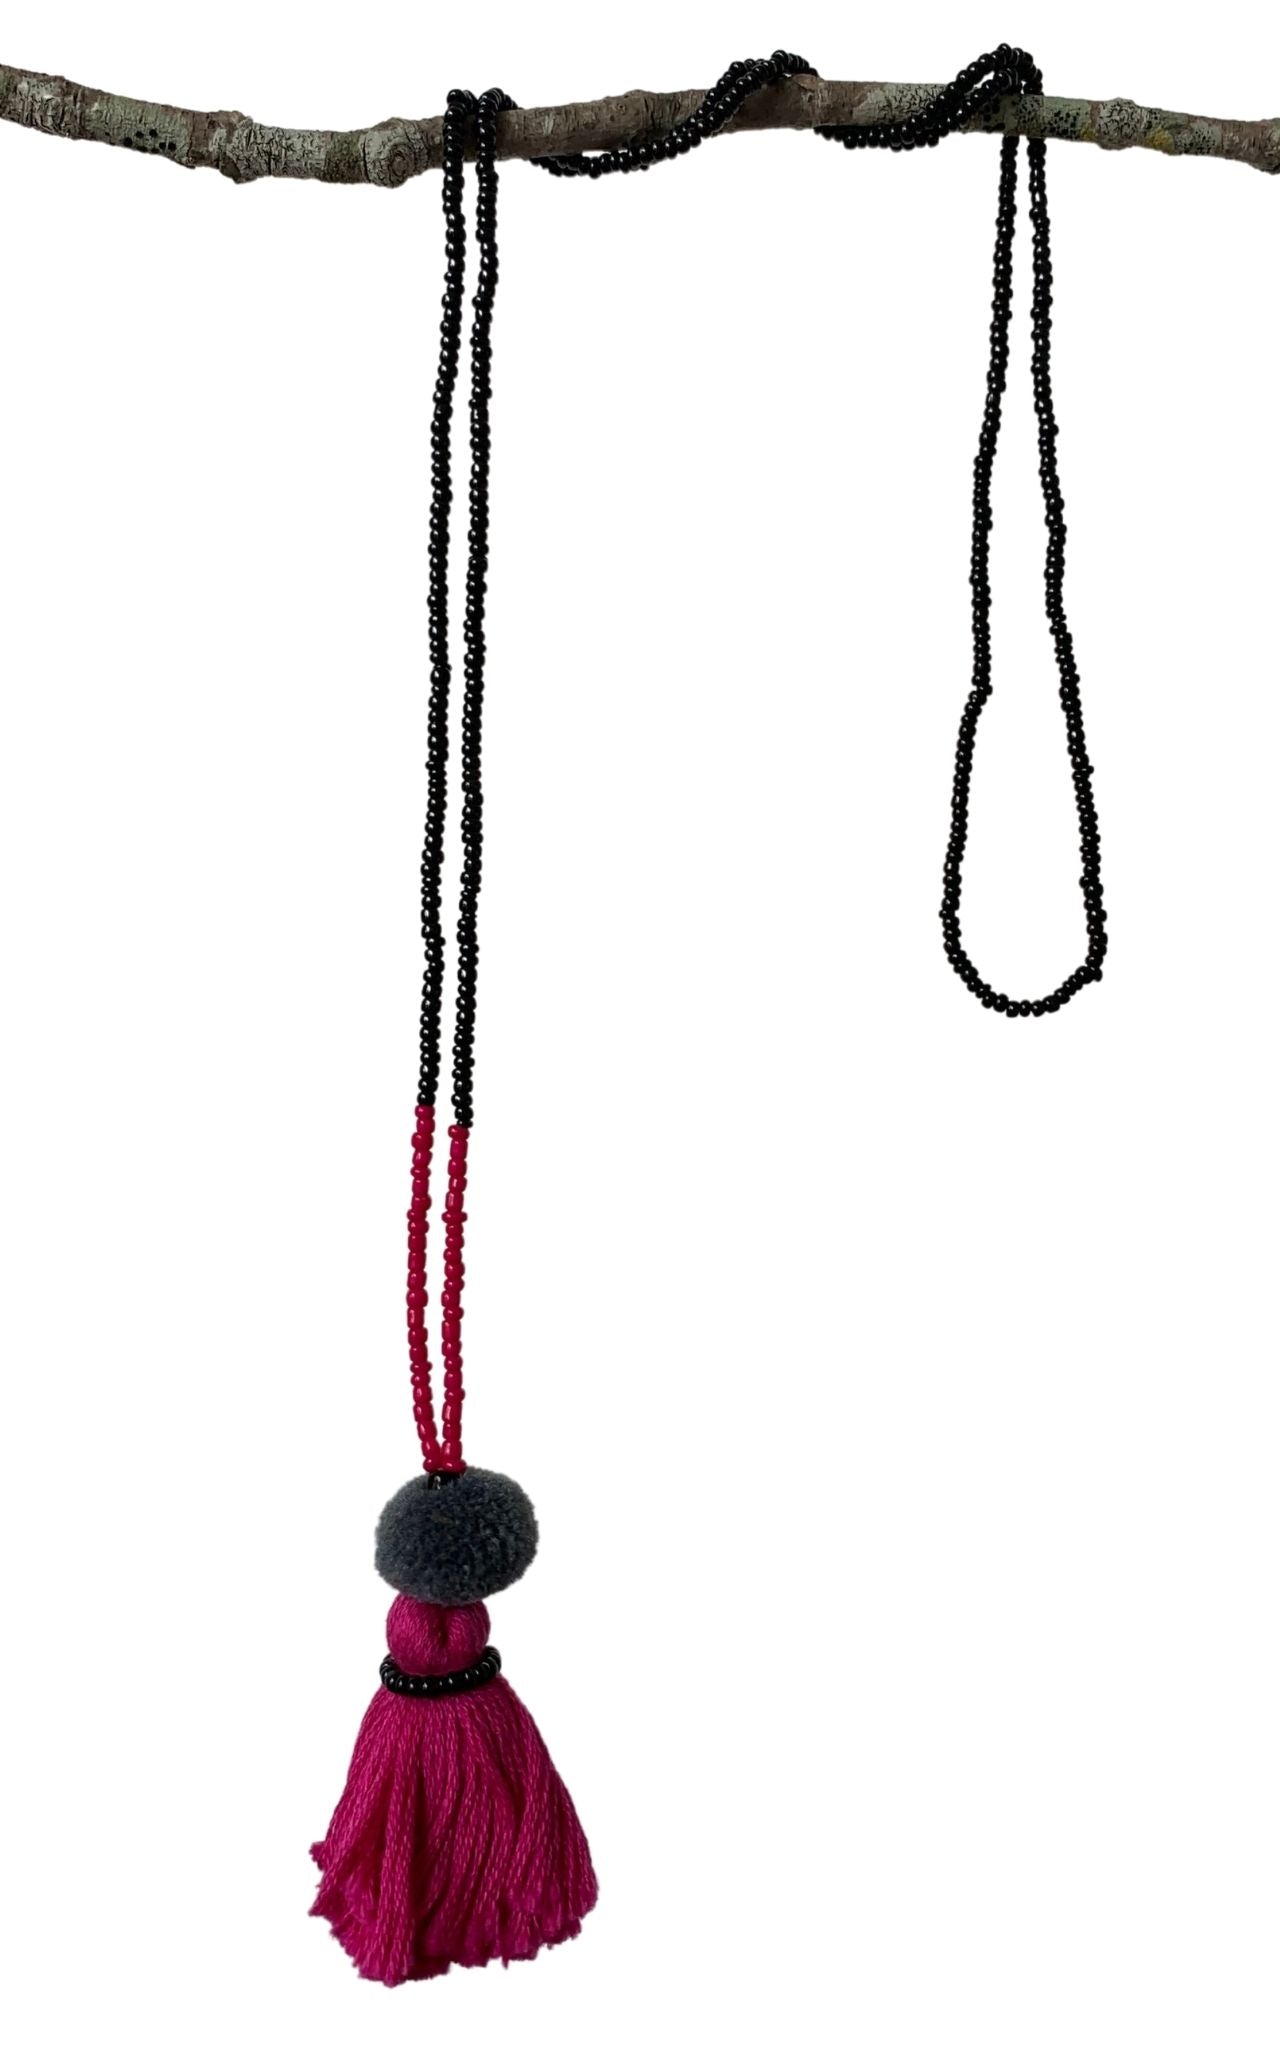 Surya Australia Cotton Tassel Necklaces from Nepal - Maroon + Black